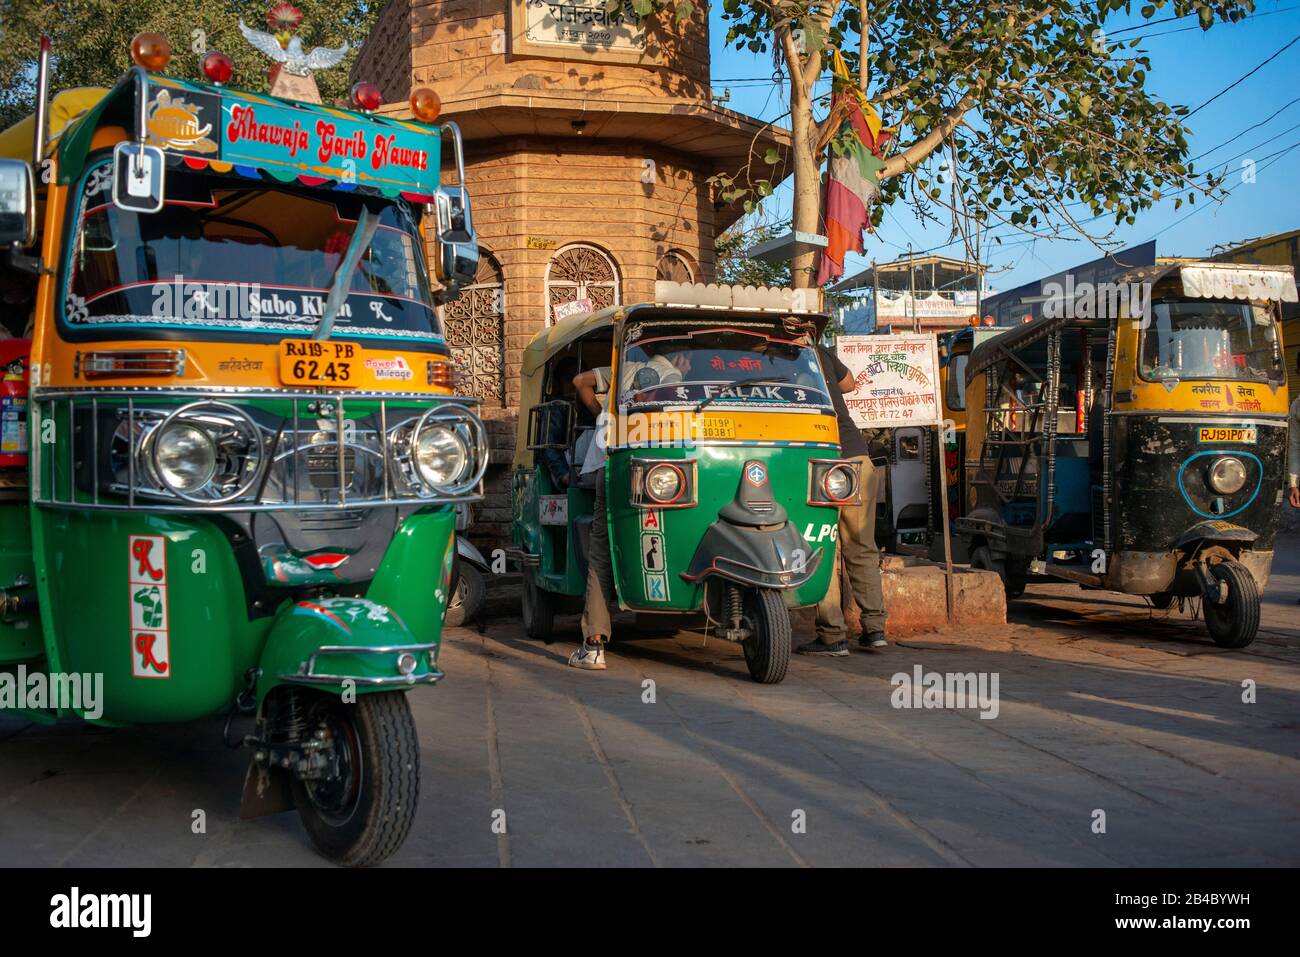 Tuk tuks o rickshaws in attesa fuori Sardar Bazaar, Jodhpur, Rajasthan, India. Questa è una delle escursioni del treno di lusso Maharaja express. Foto Stock